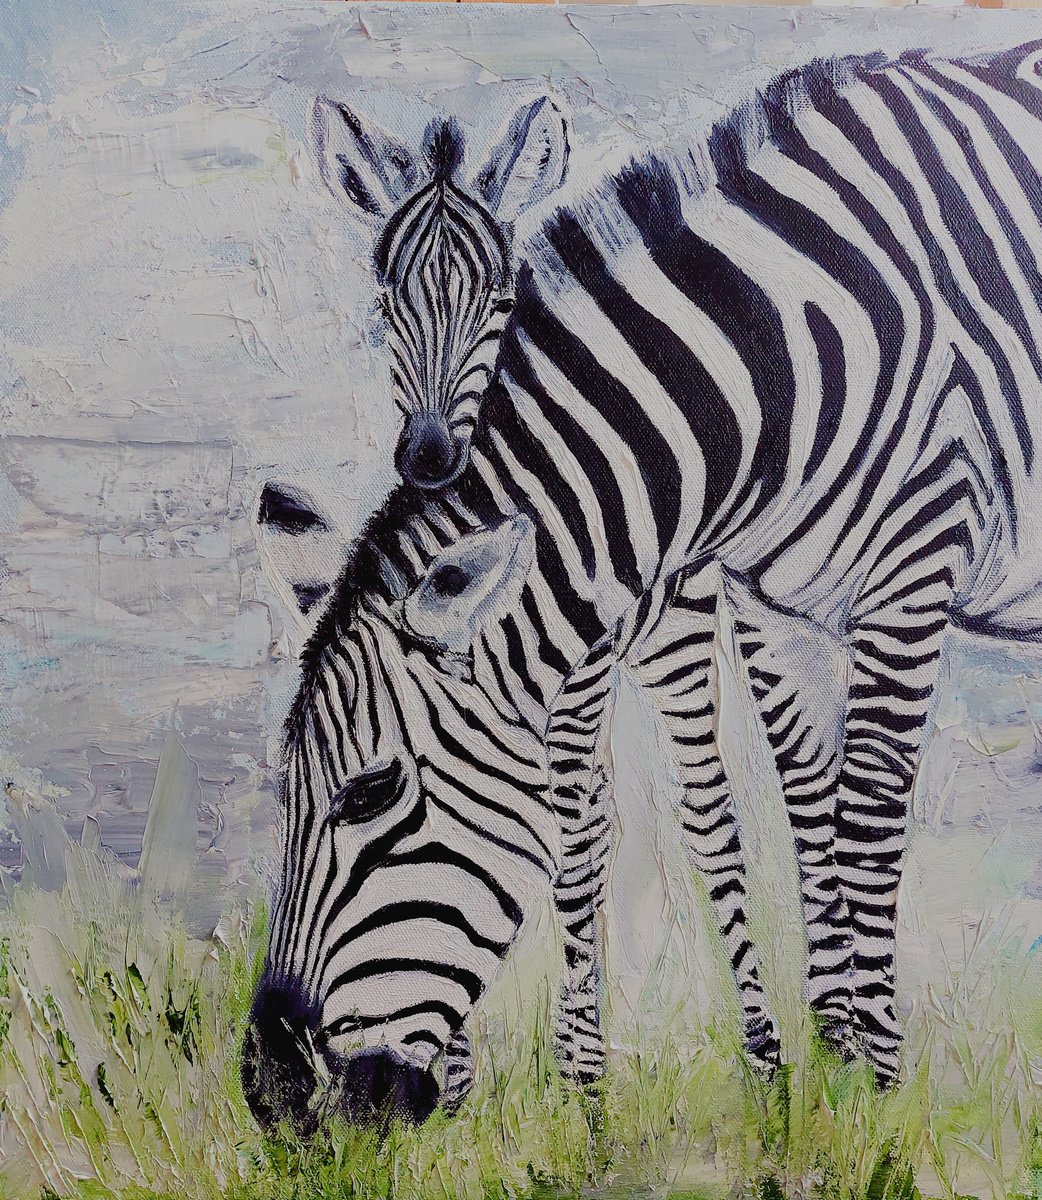 Zebras by Ira Whittaker